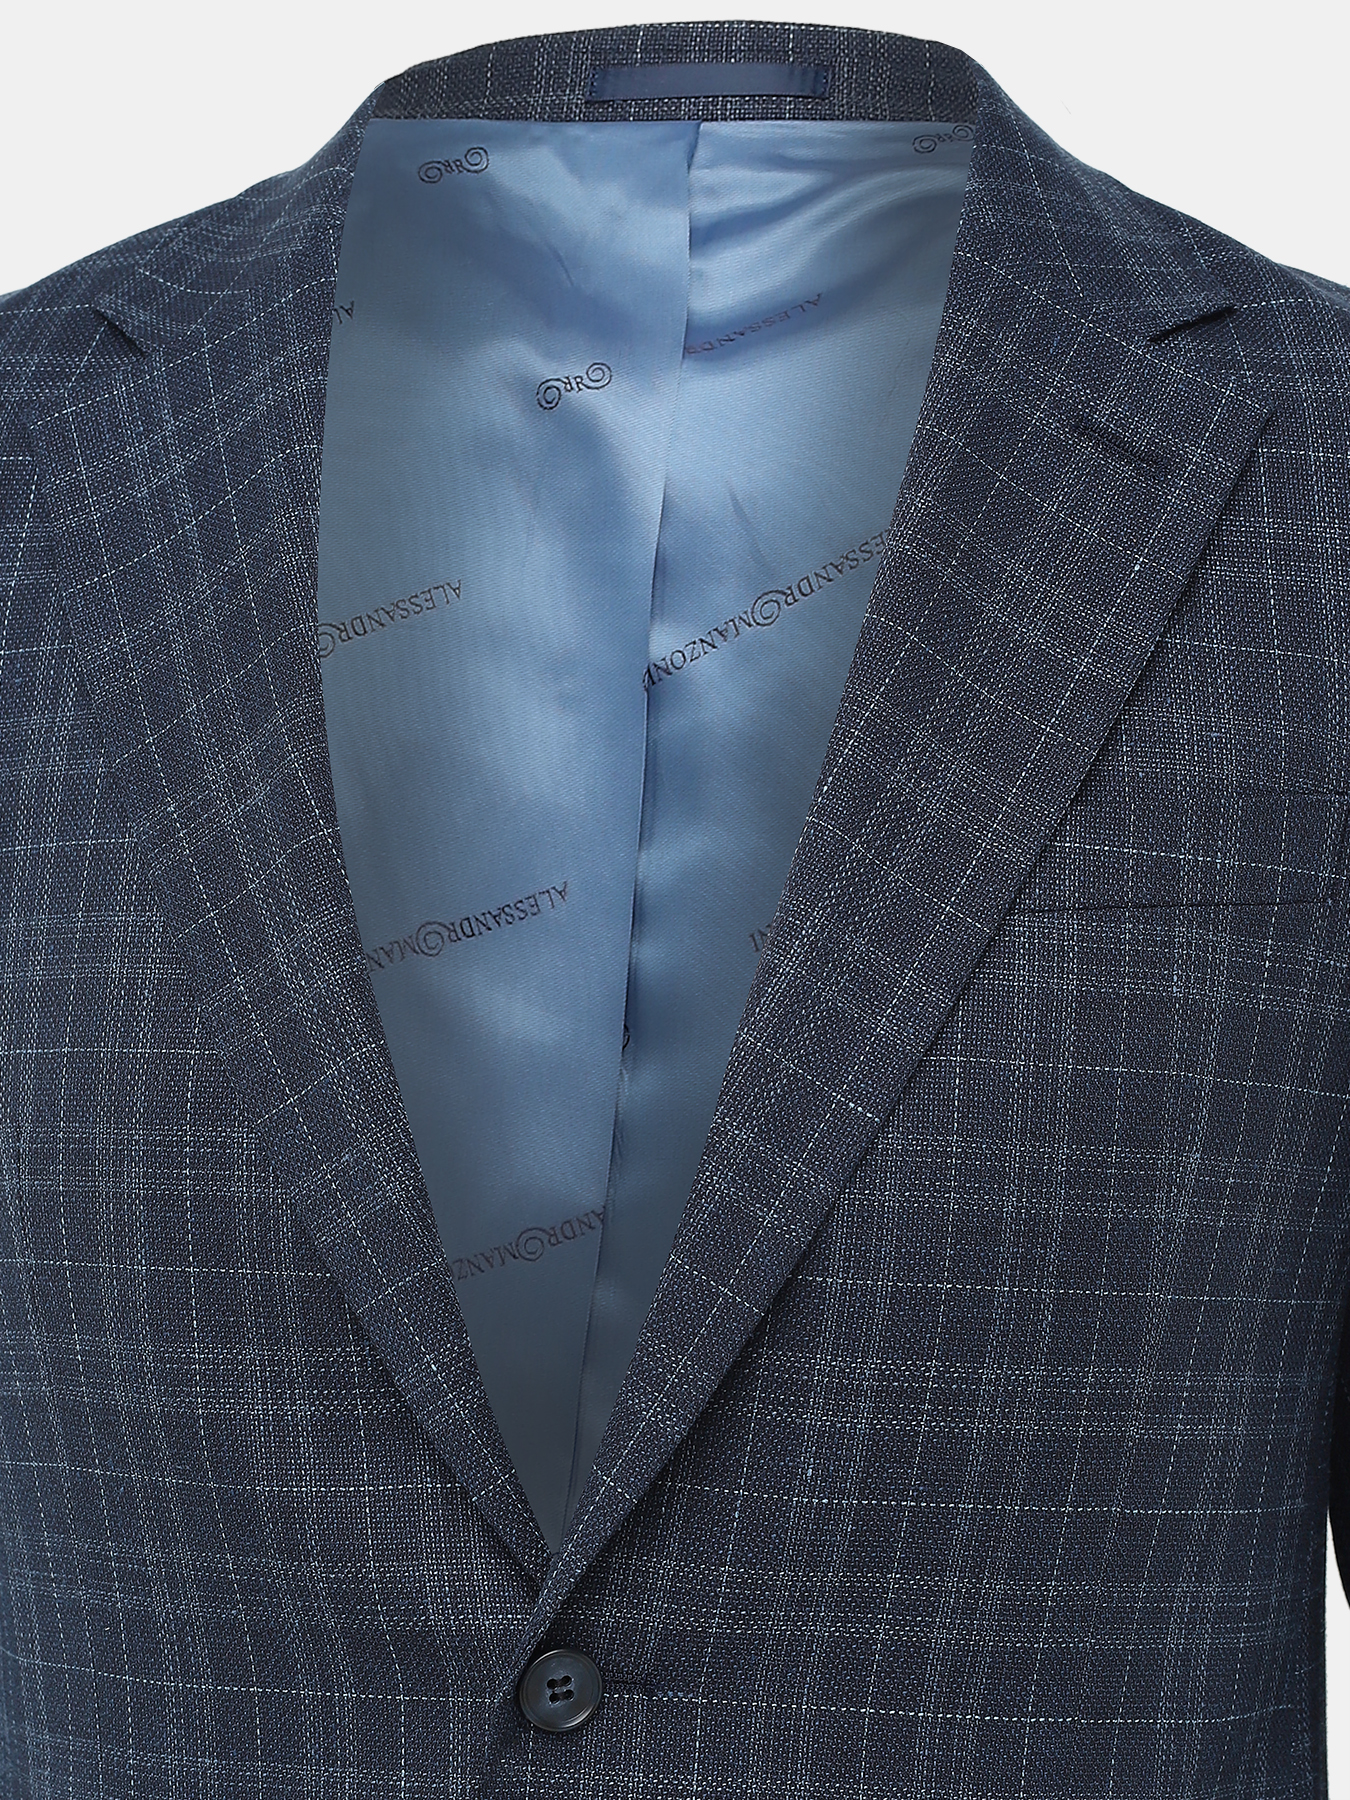 Пиджак Alessandro Manzoni 421119-070, цвет синий, размер 56 - фото 3